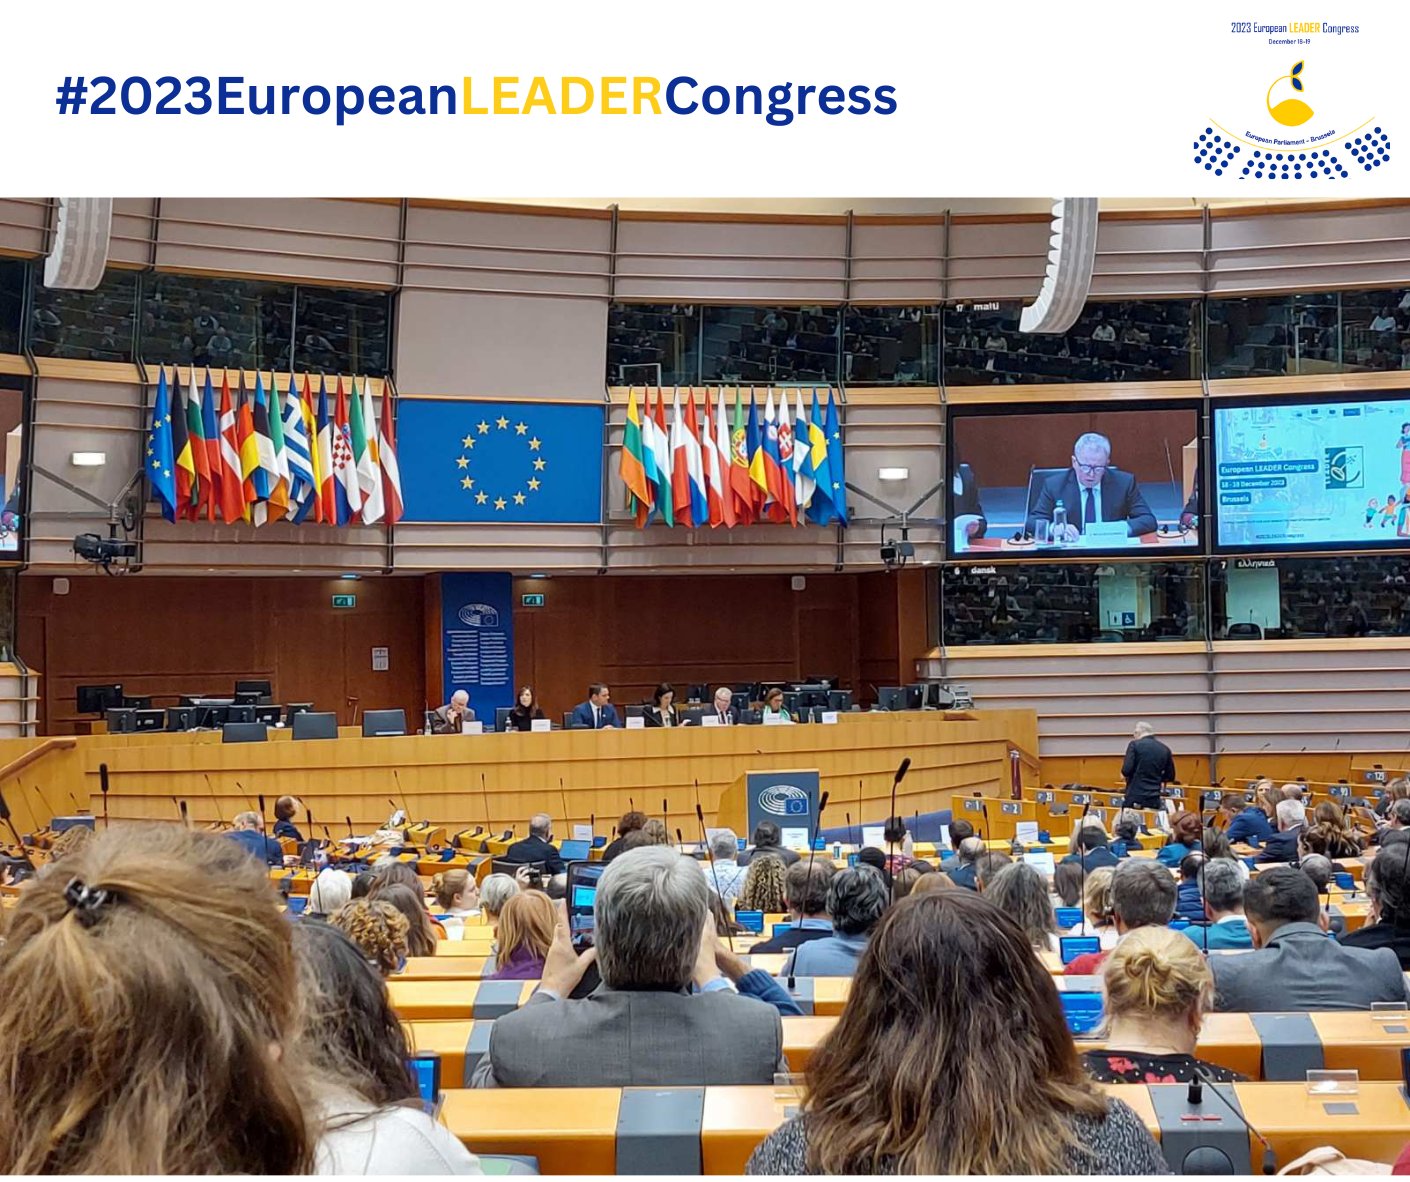 Participation in the European LEADER Congress in the European Parliament